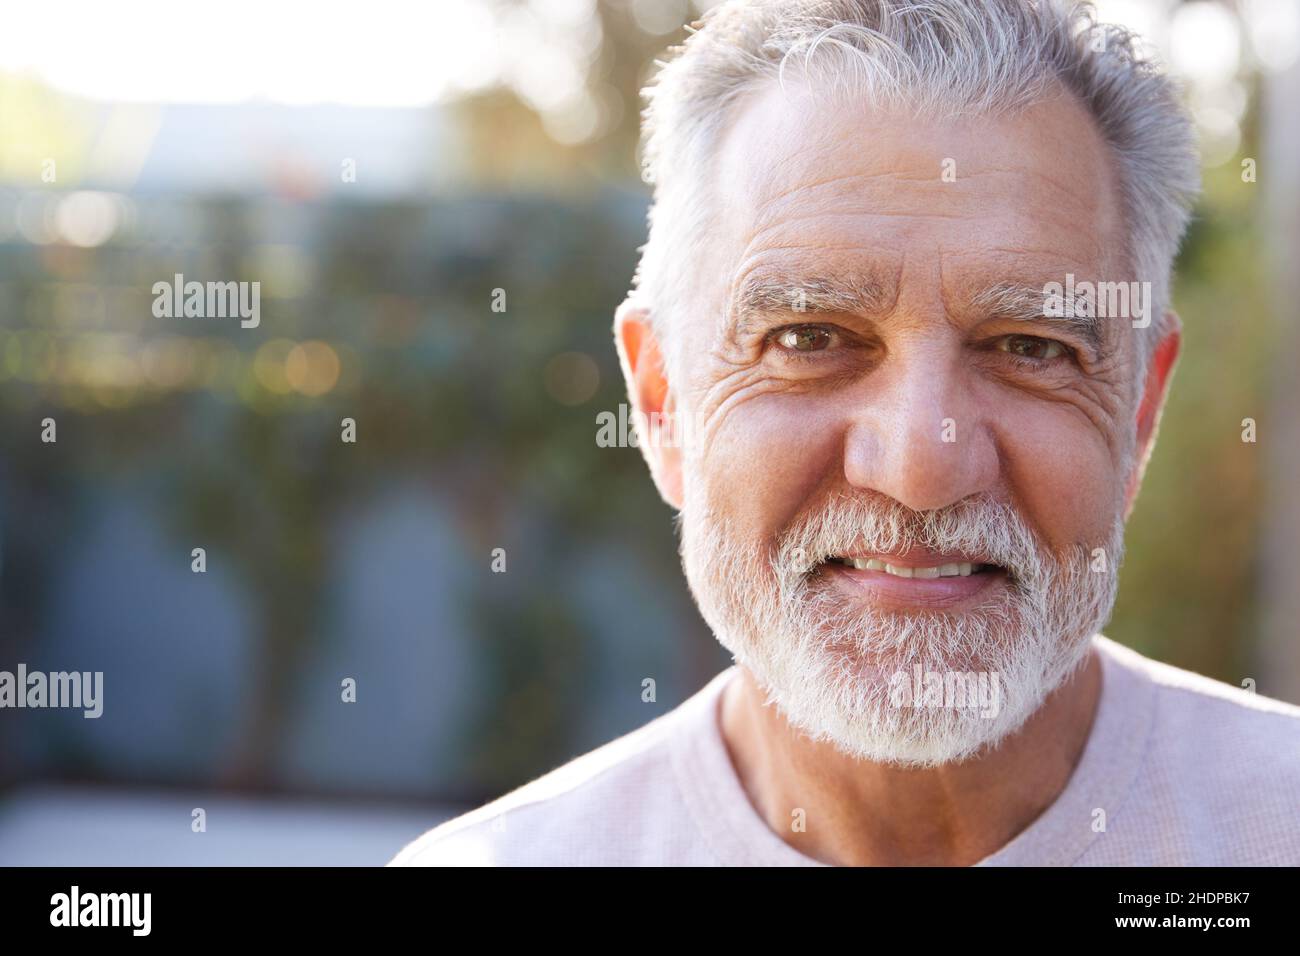 senior, gray hair, portrait, beard, elderly, old, seniors, gray hairs, grey hair, portraits, beards Stock Photo